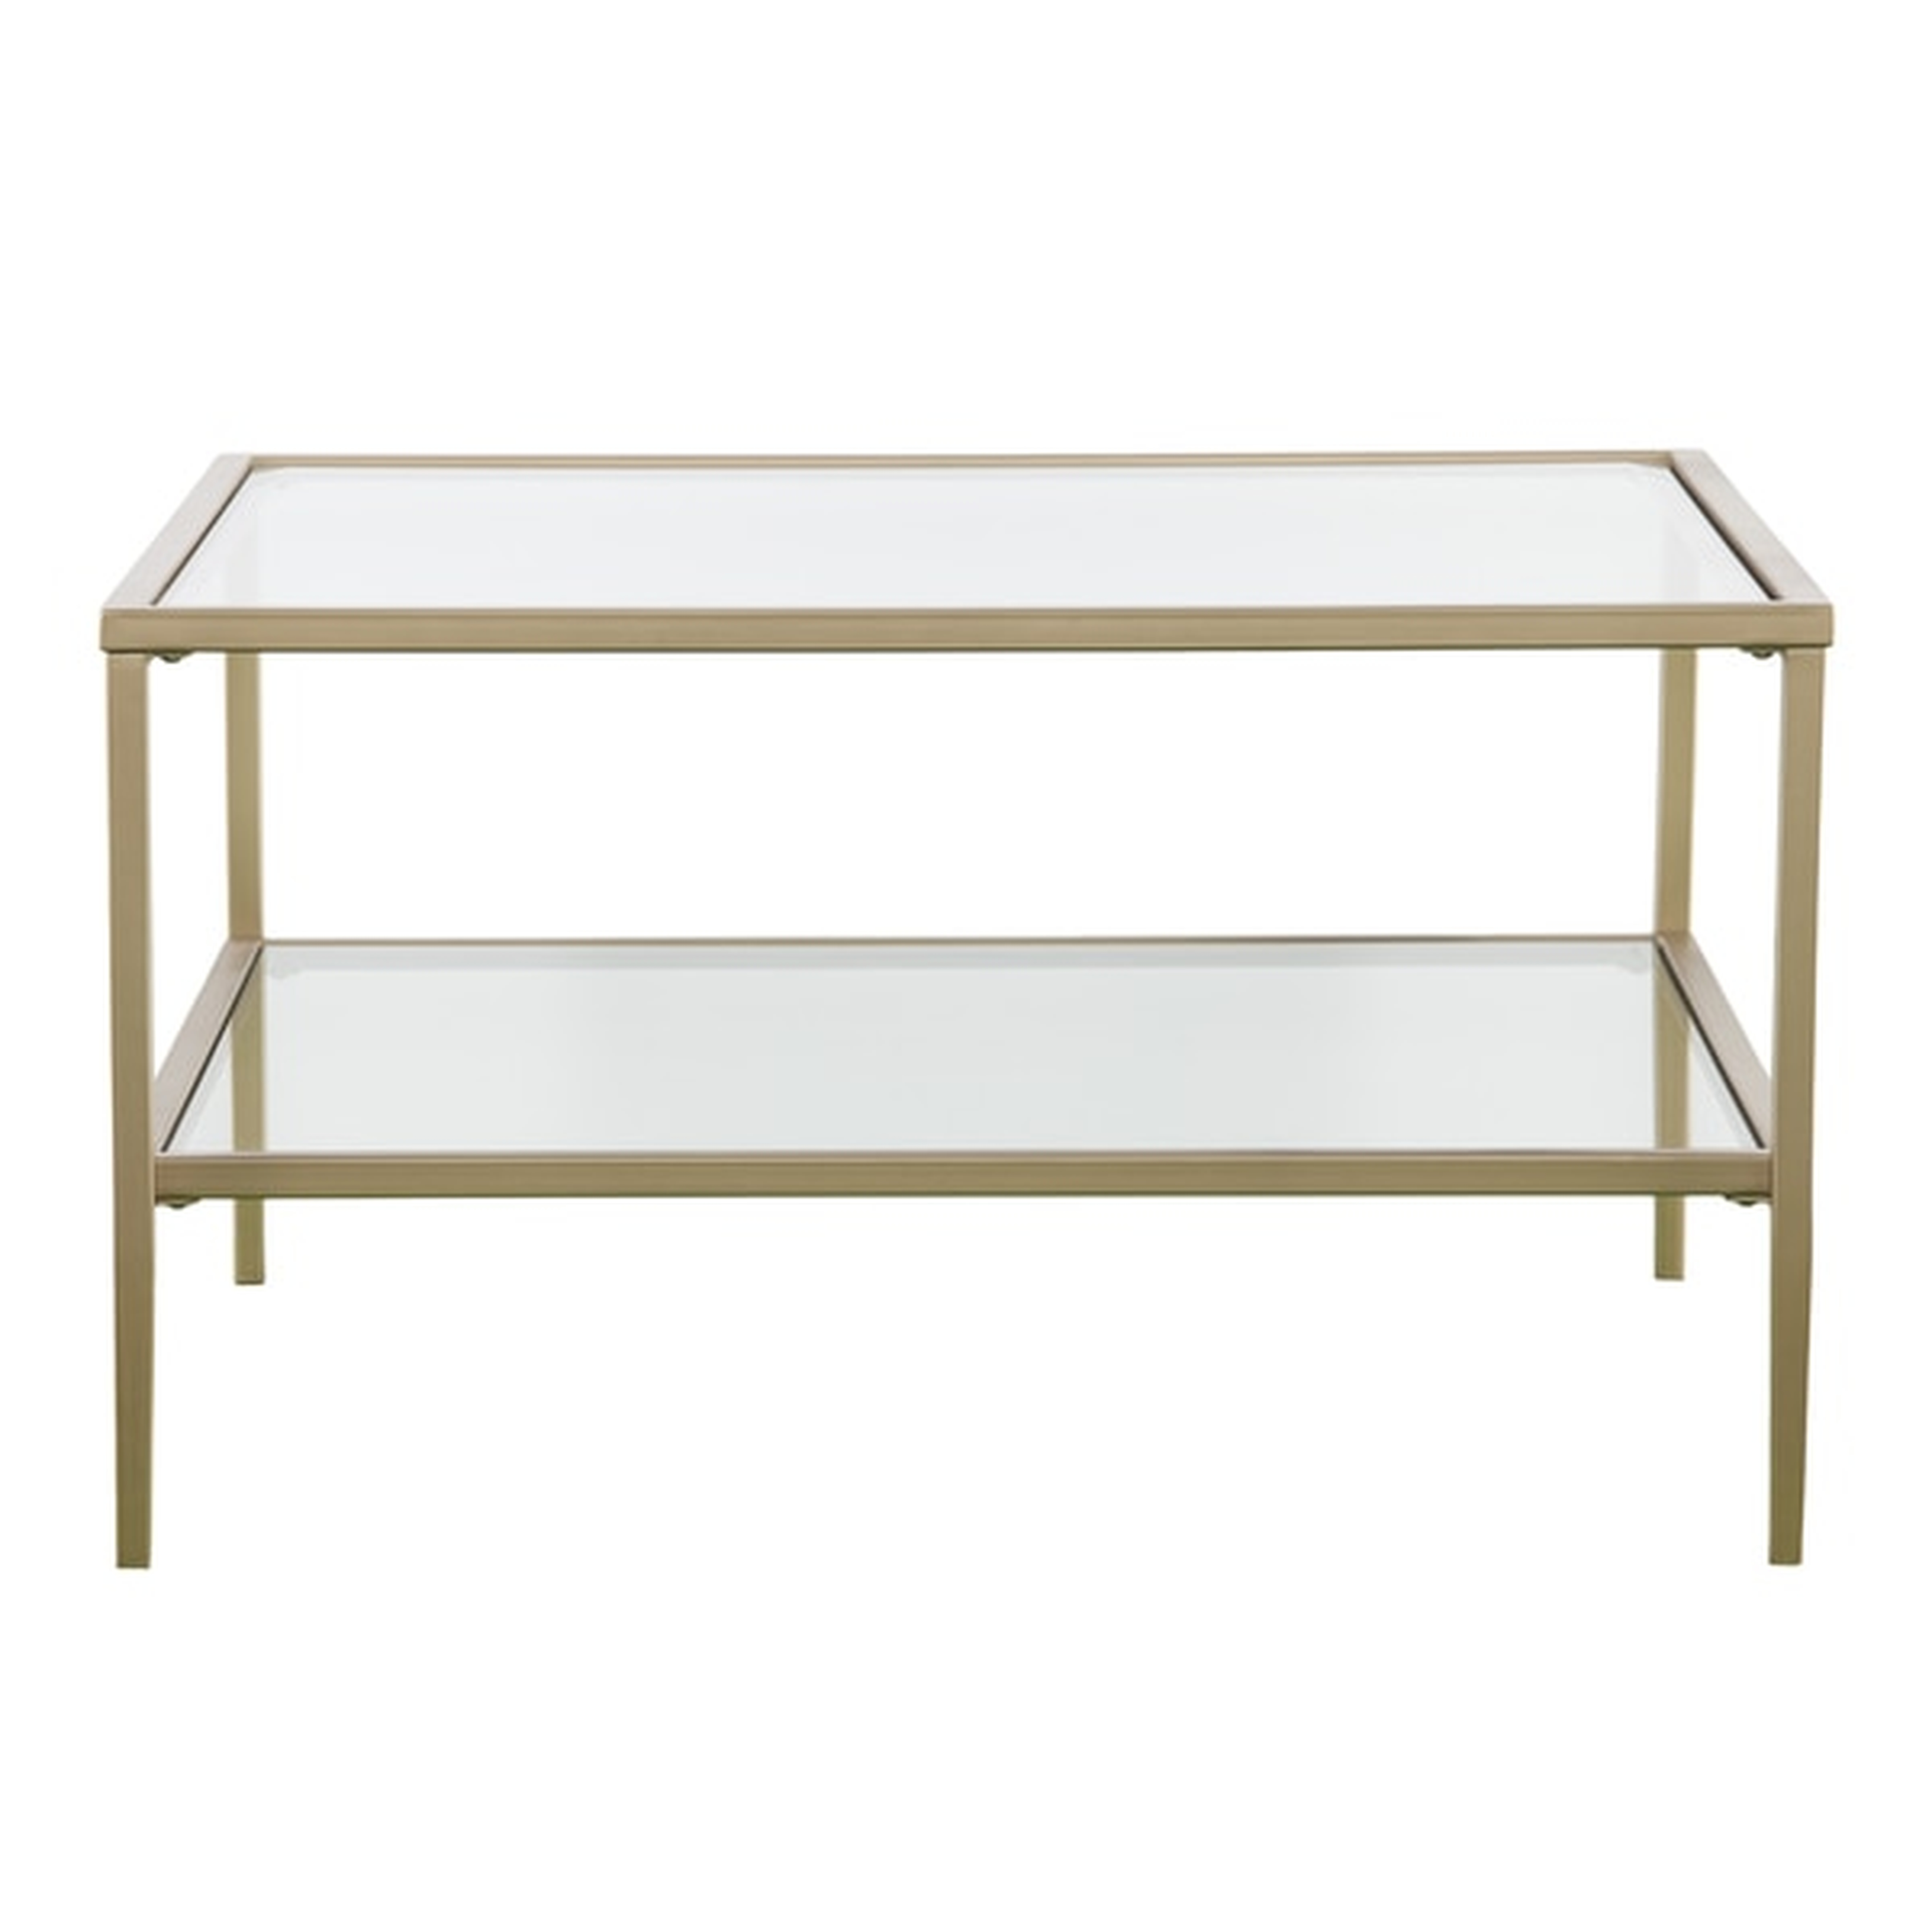 Harper Blvd Kolder Square Metal/Glass Open Shelf Cocktail Table - Gold - Overstock